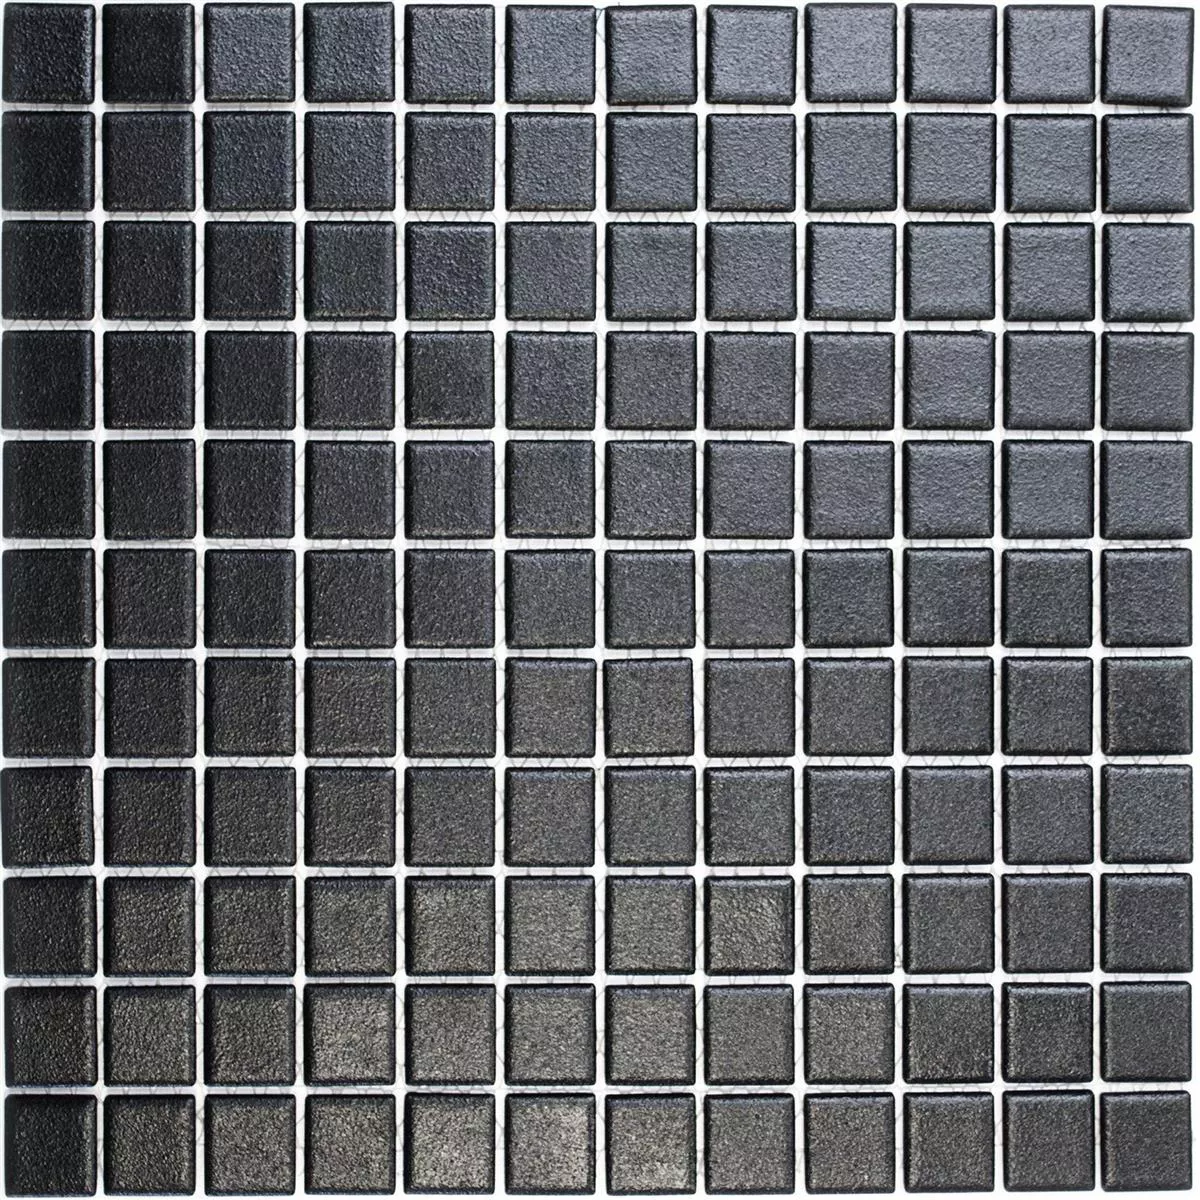 Sample Ceramic Mosaic Tiles Pilamaya Black Non-Slip R10 Q25